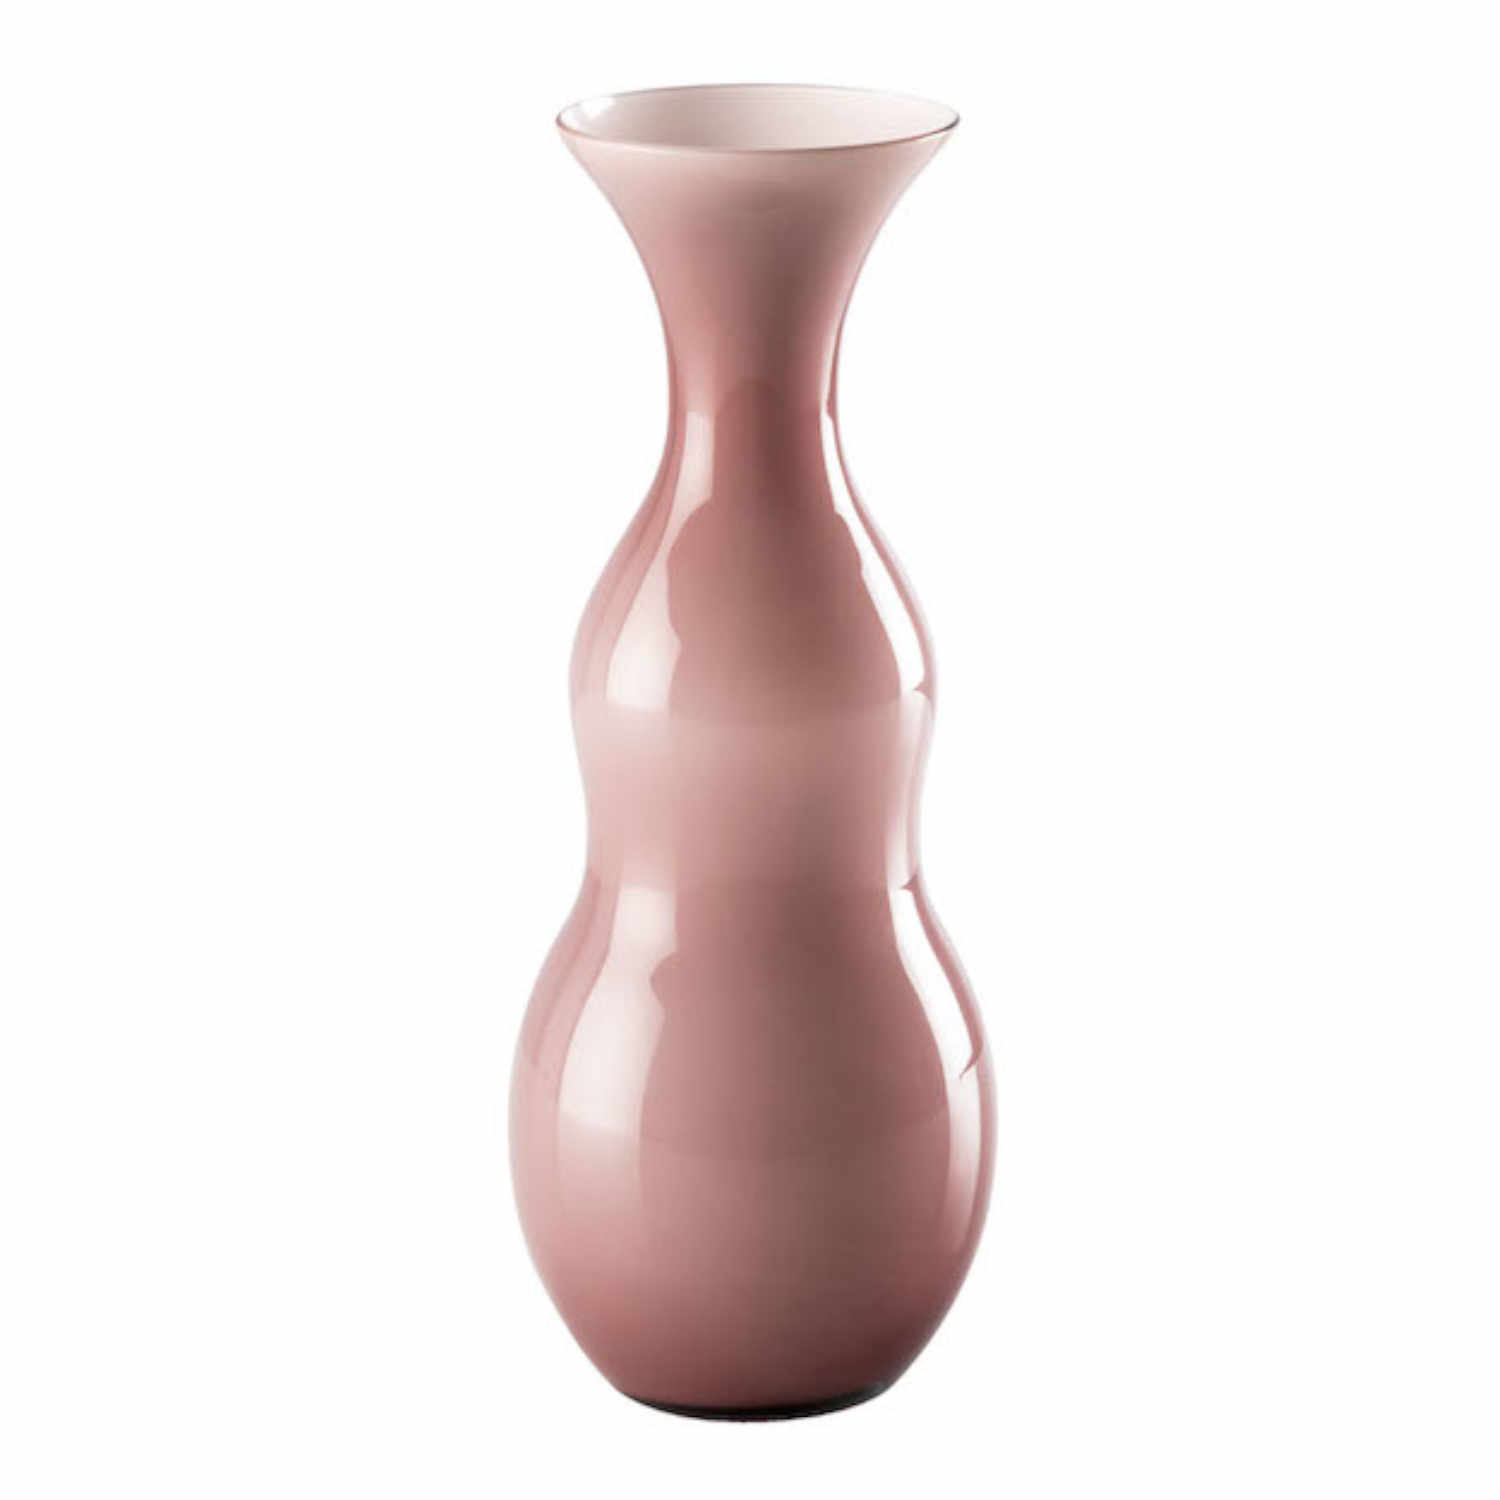 PIGMENTI Vase, Grösse h. 26 cm, Farbe opal/amethyst von Venini